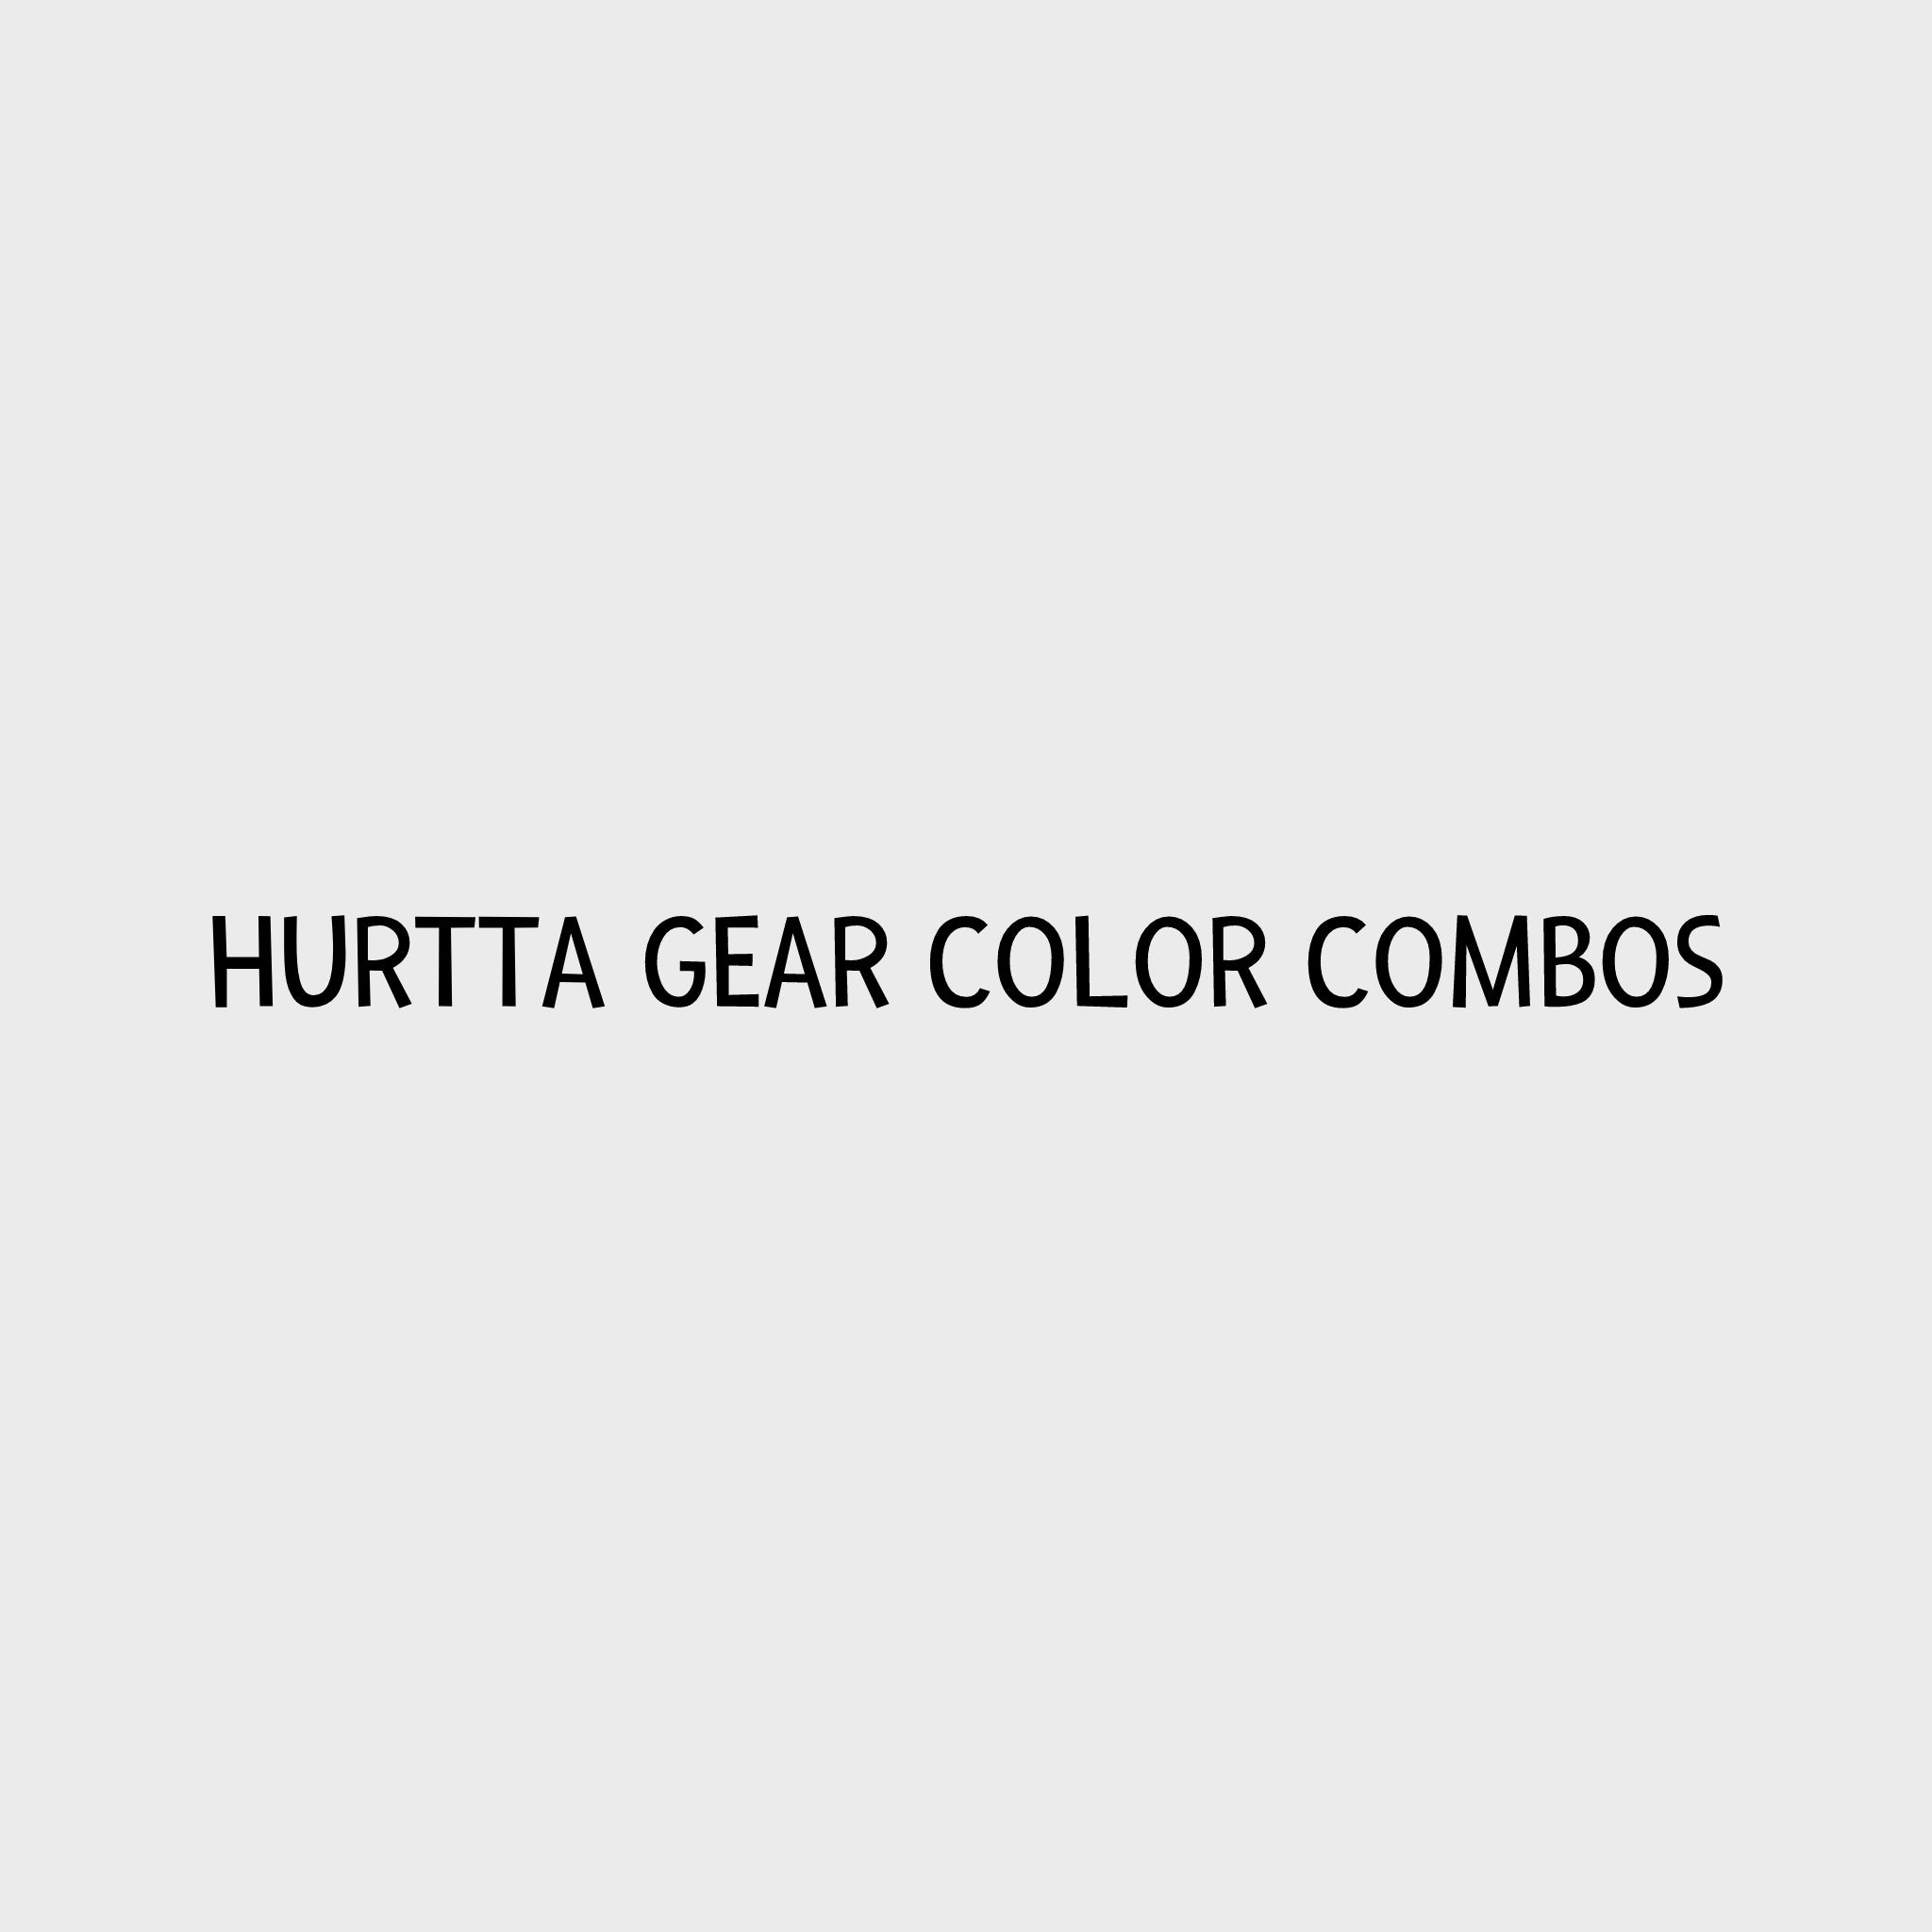 Video - Hurtta Gear Color Combos